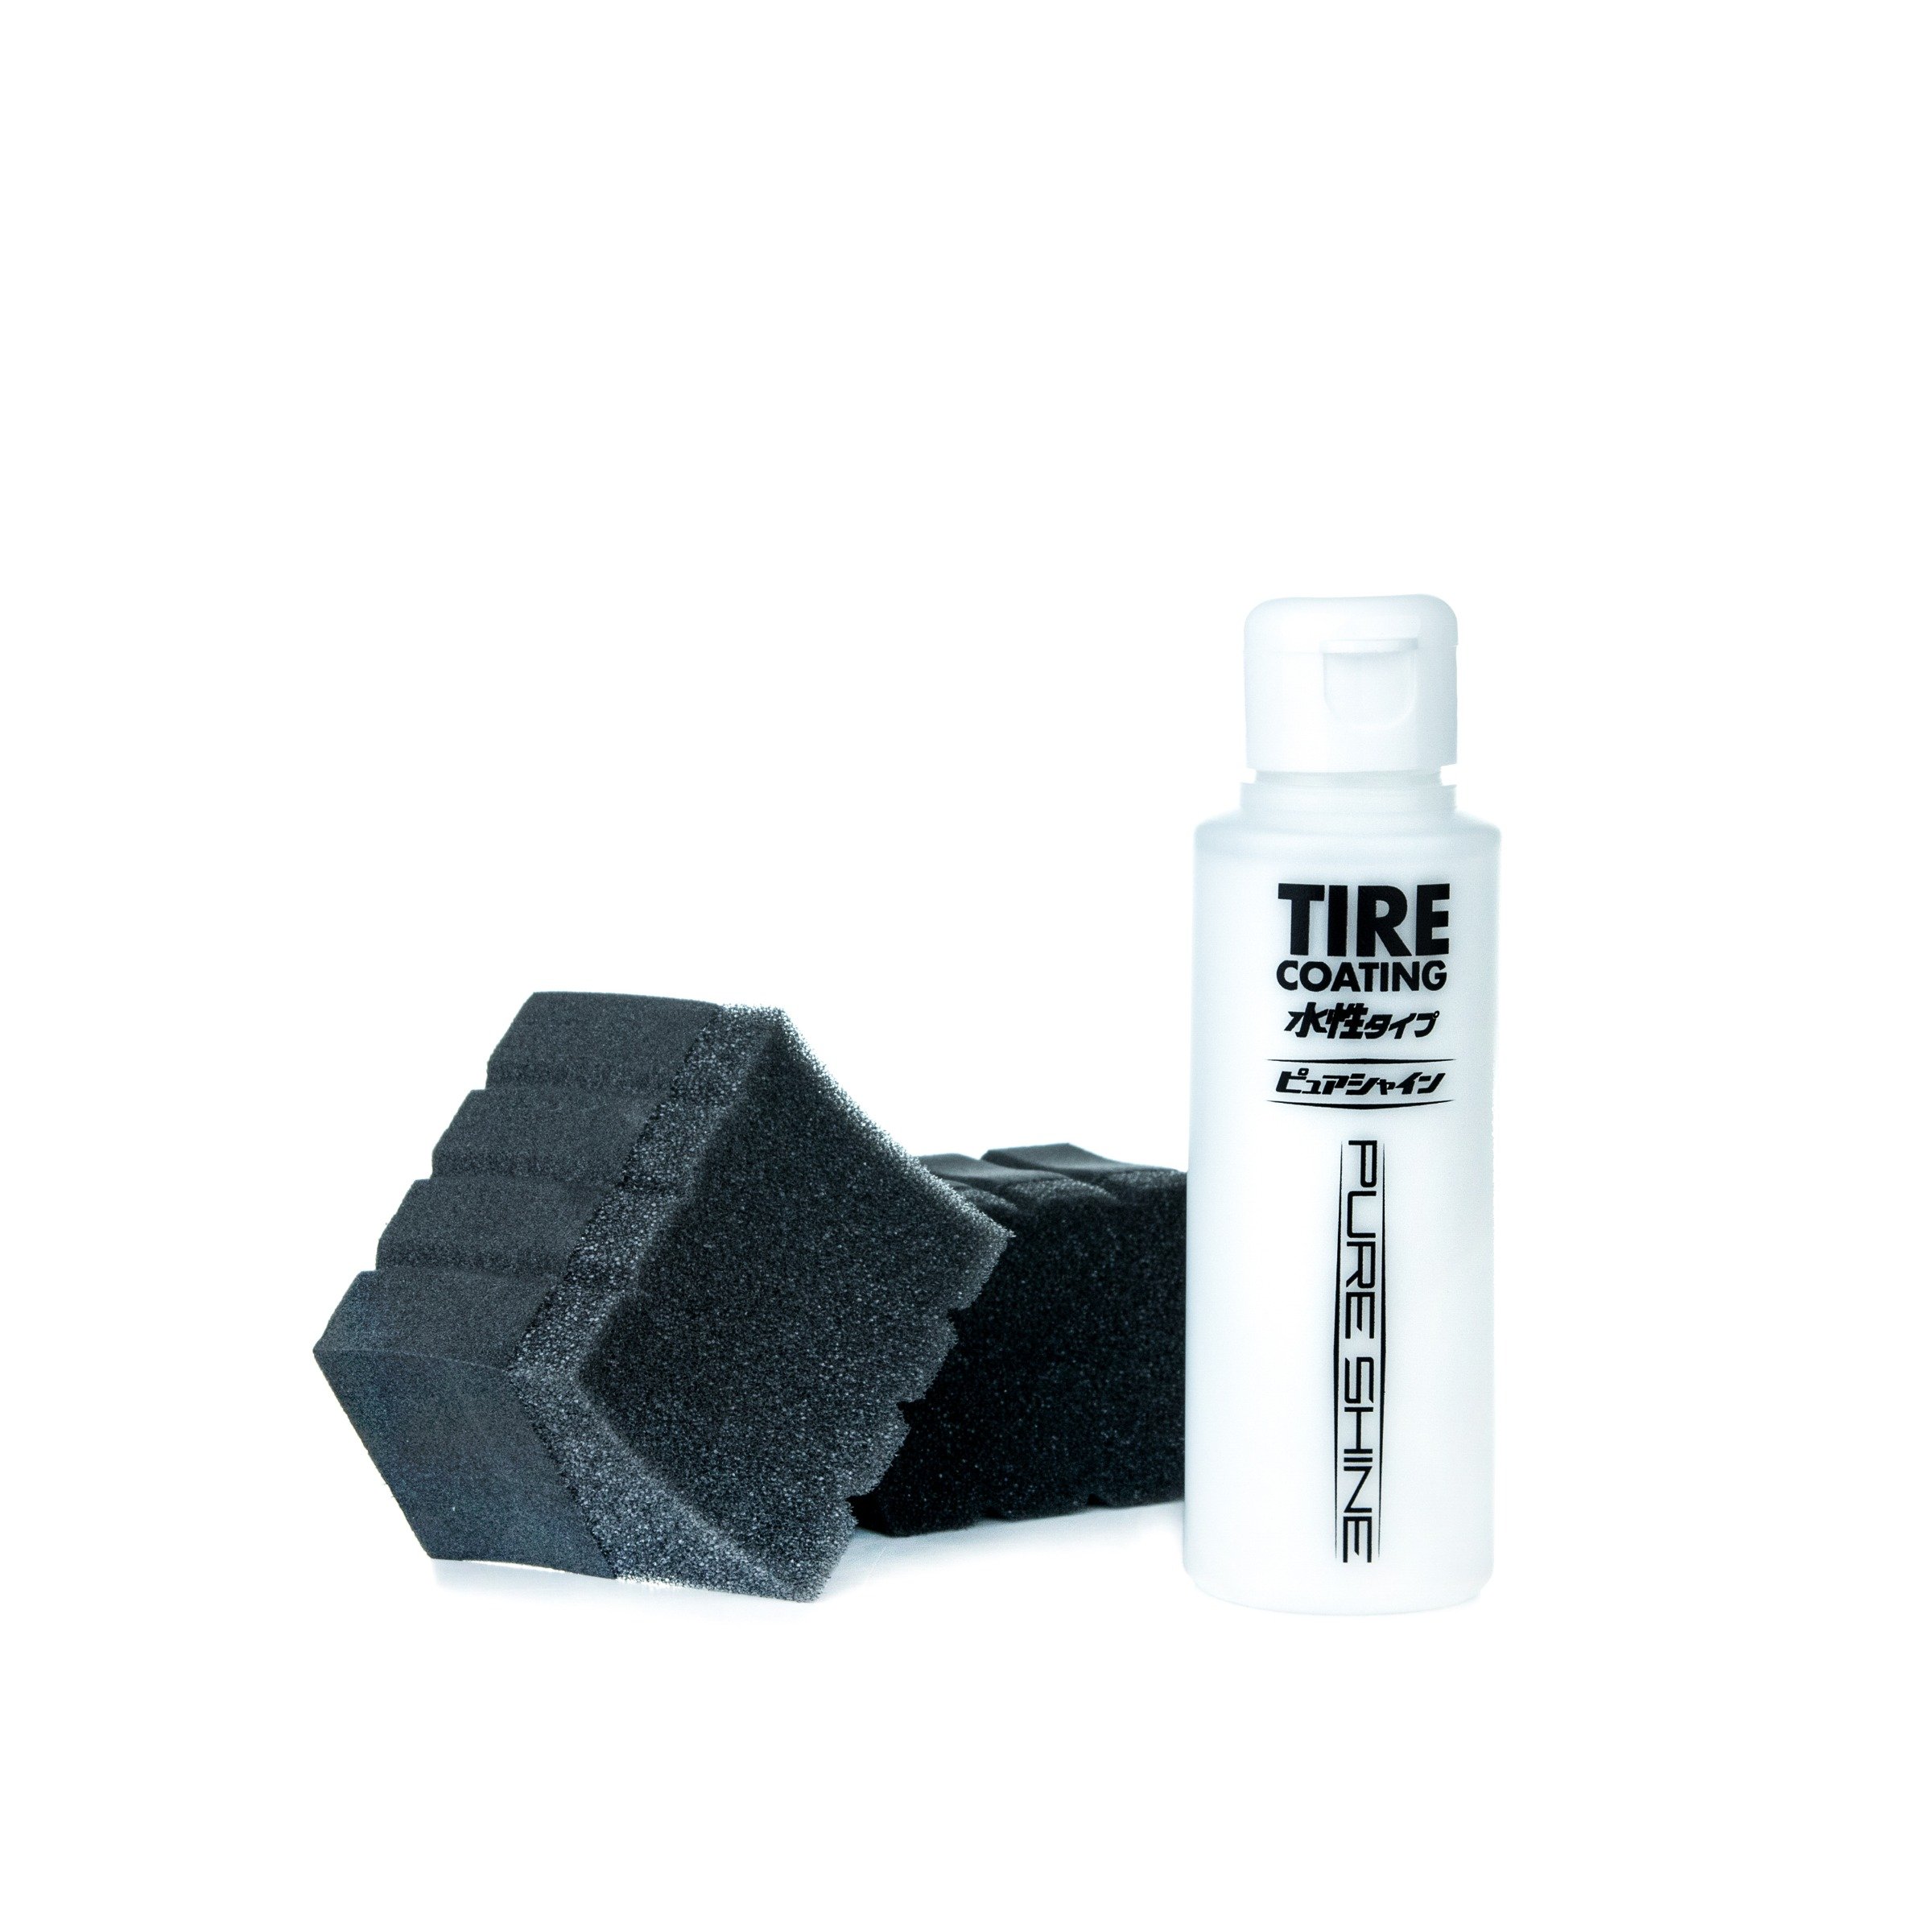 Pure-Shine Tire Coating Kit - 100ml